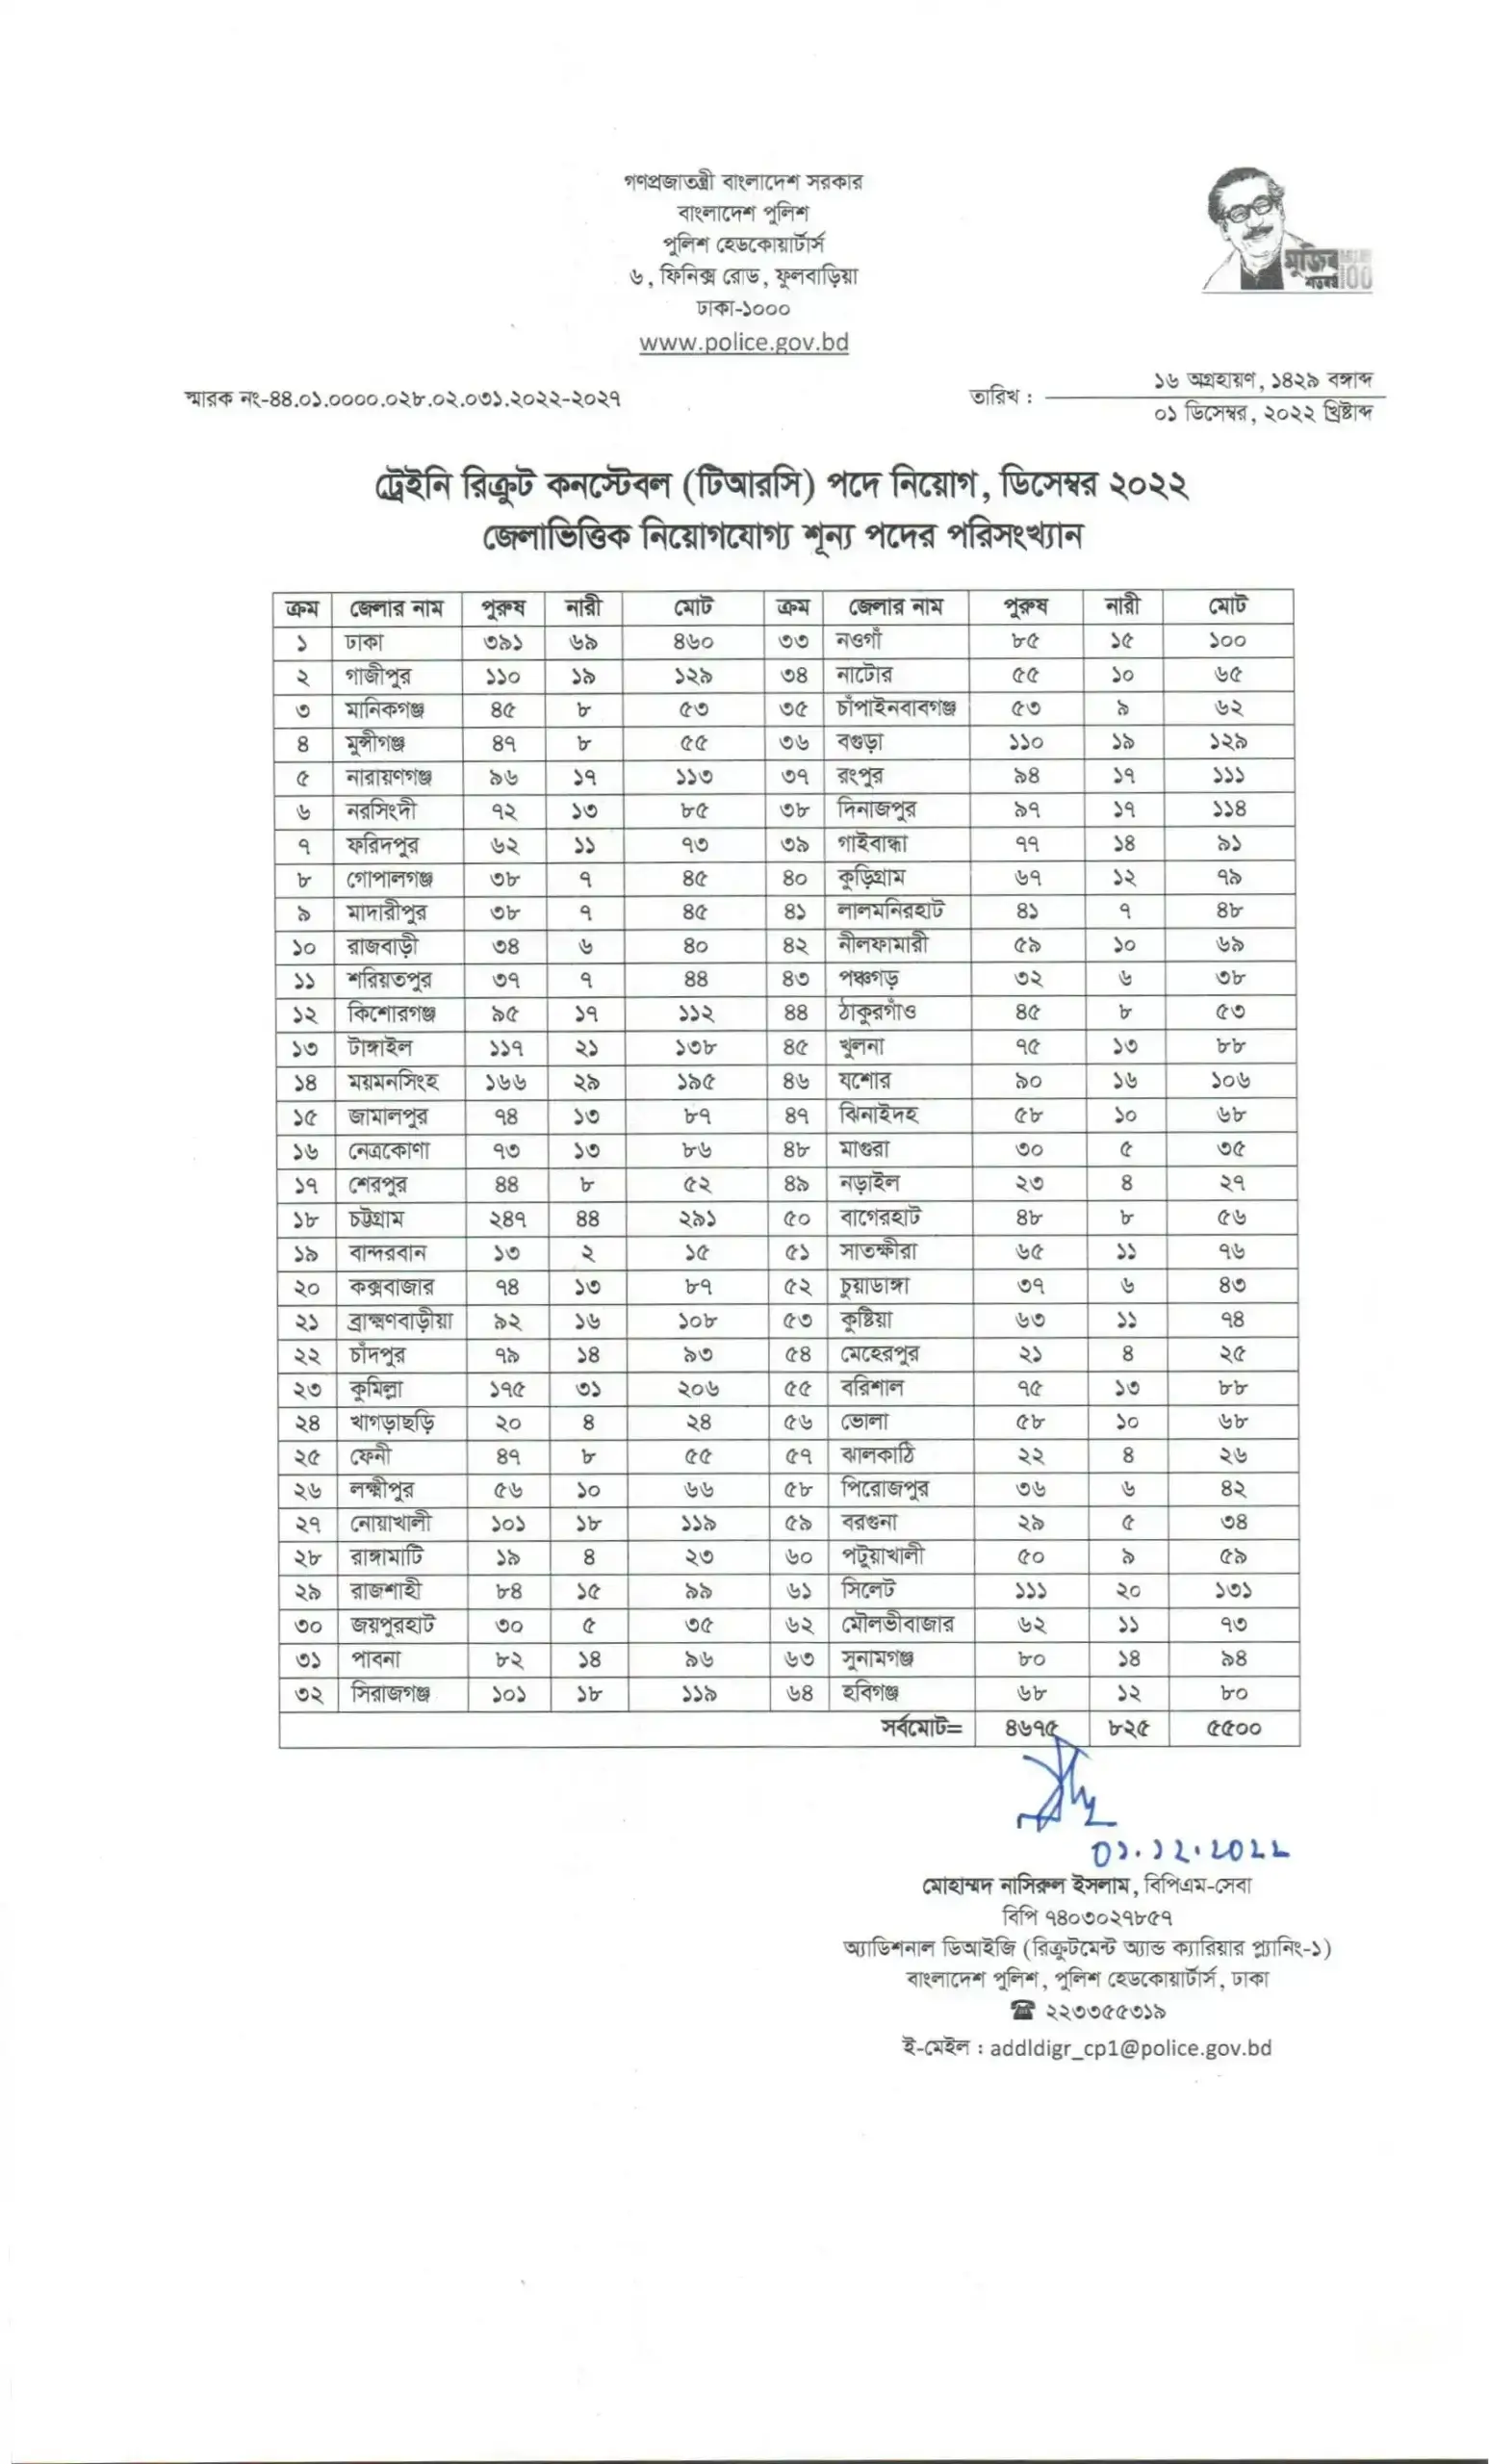 District wise number of vacancies